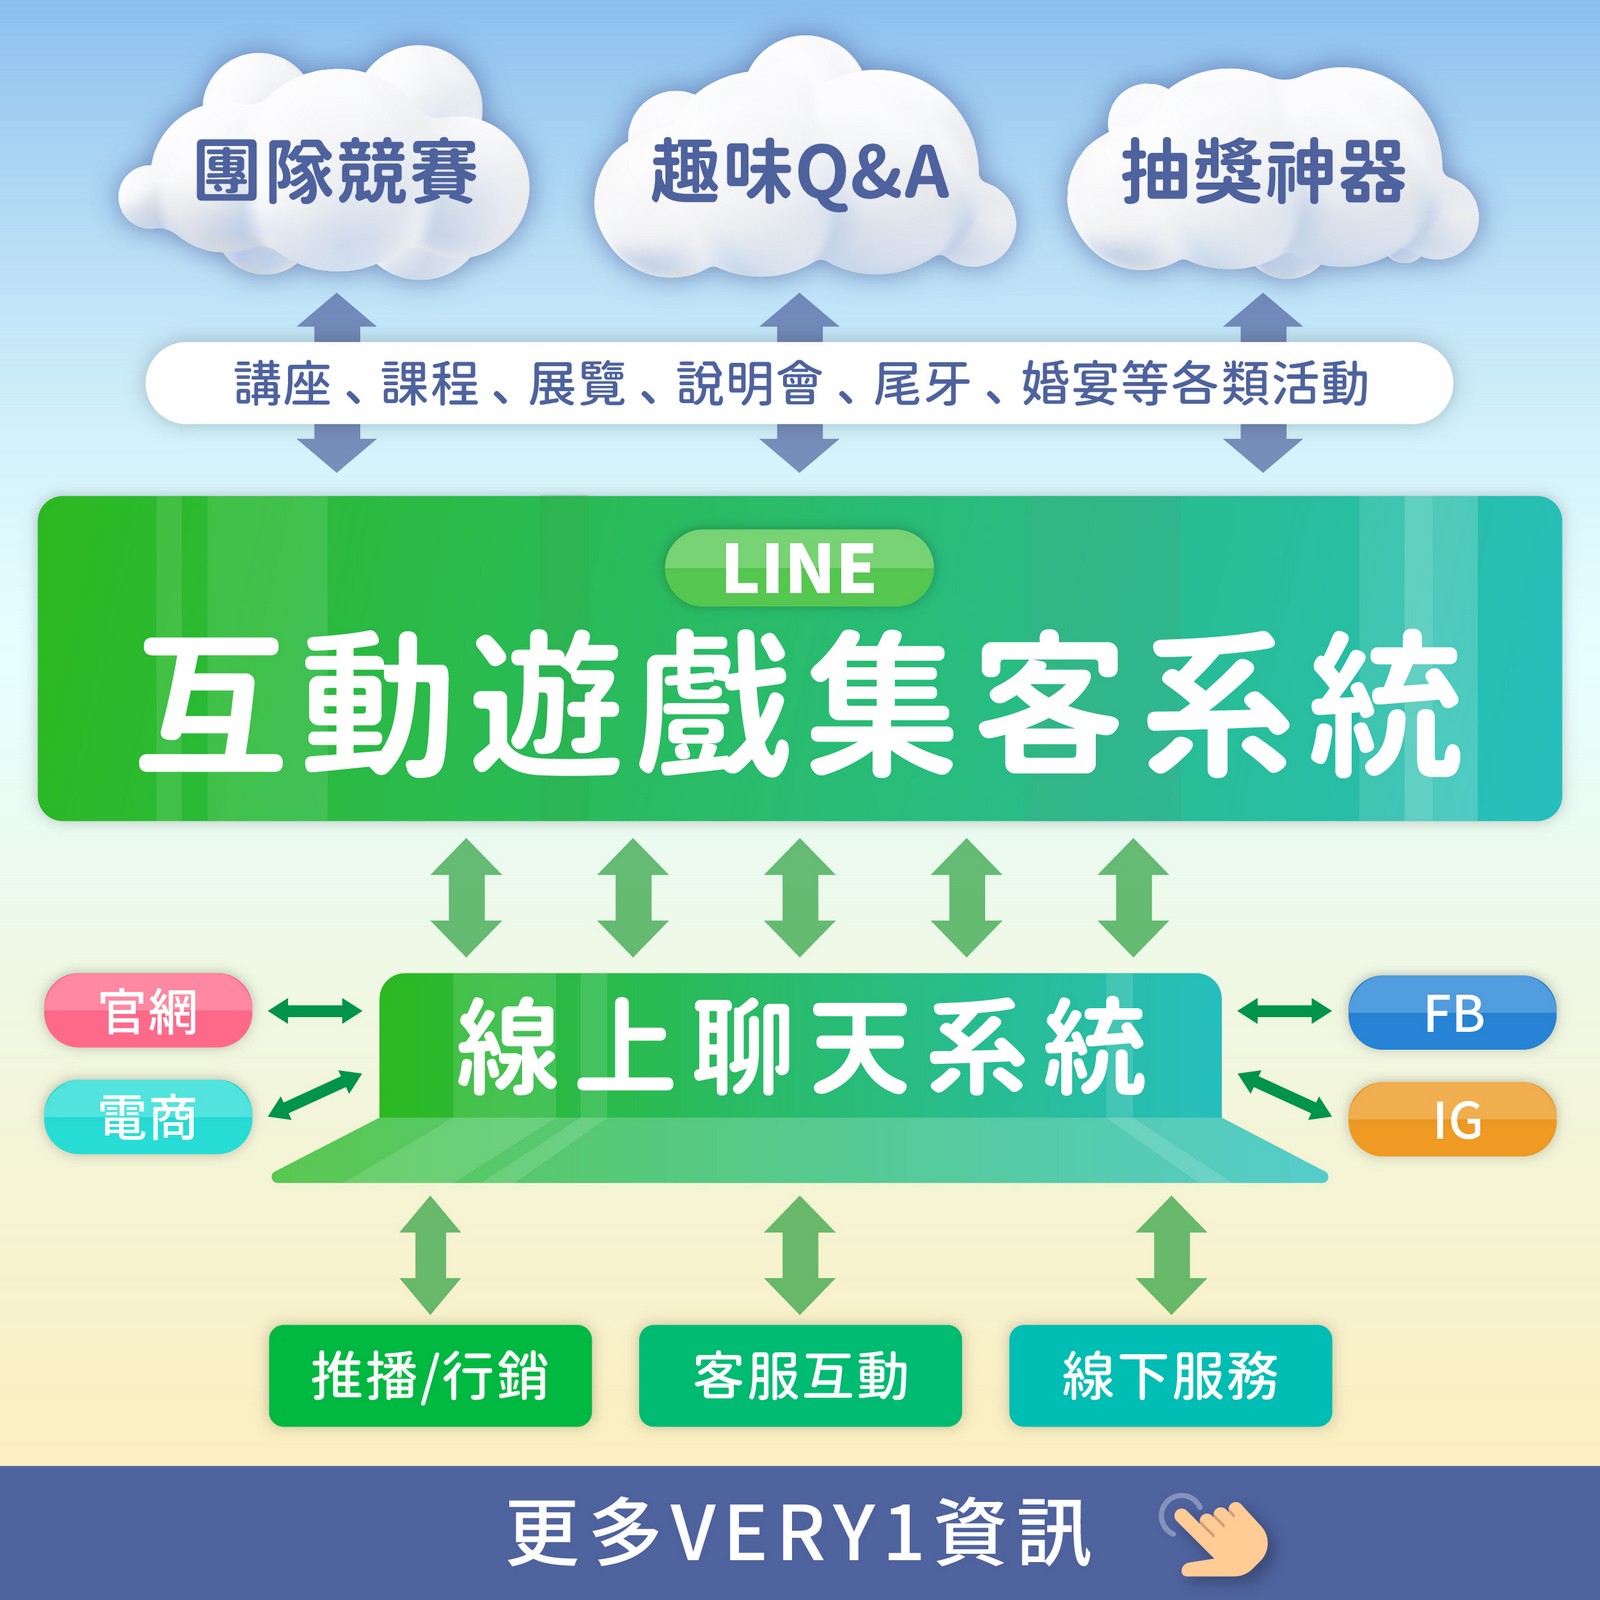 Very1系統,ERP系統,Line@串聯管理,CRM管理,企業資源管理